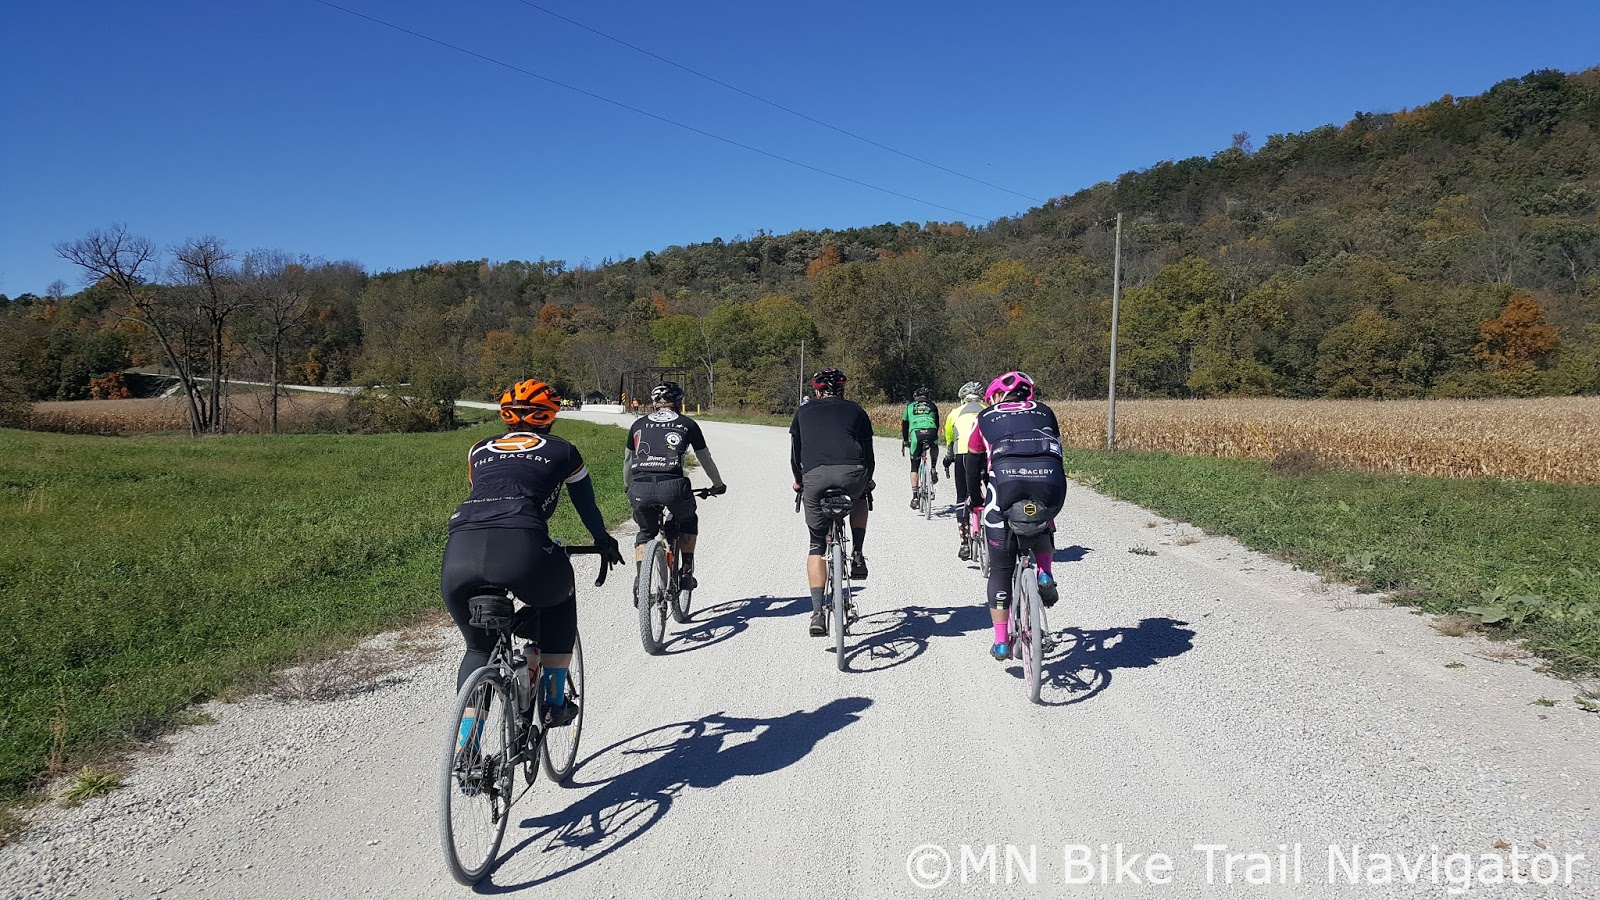 MN Bike Trail Navigator: Product Review: Camelbak Podium Water Bottles